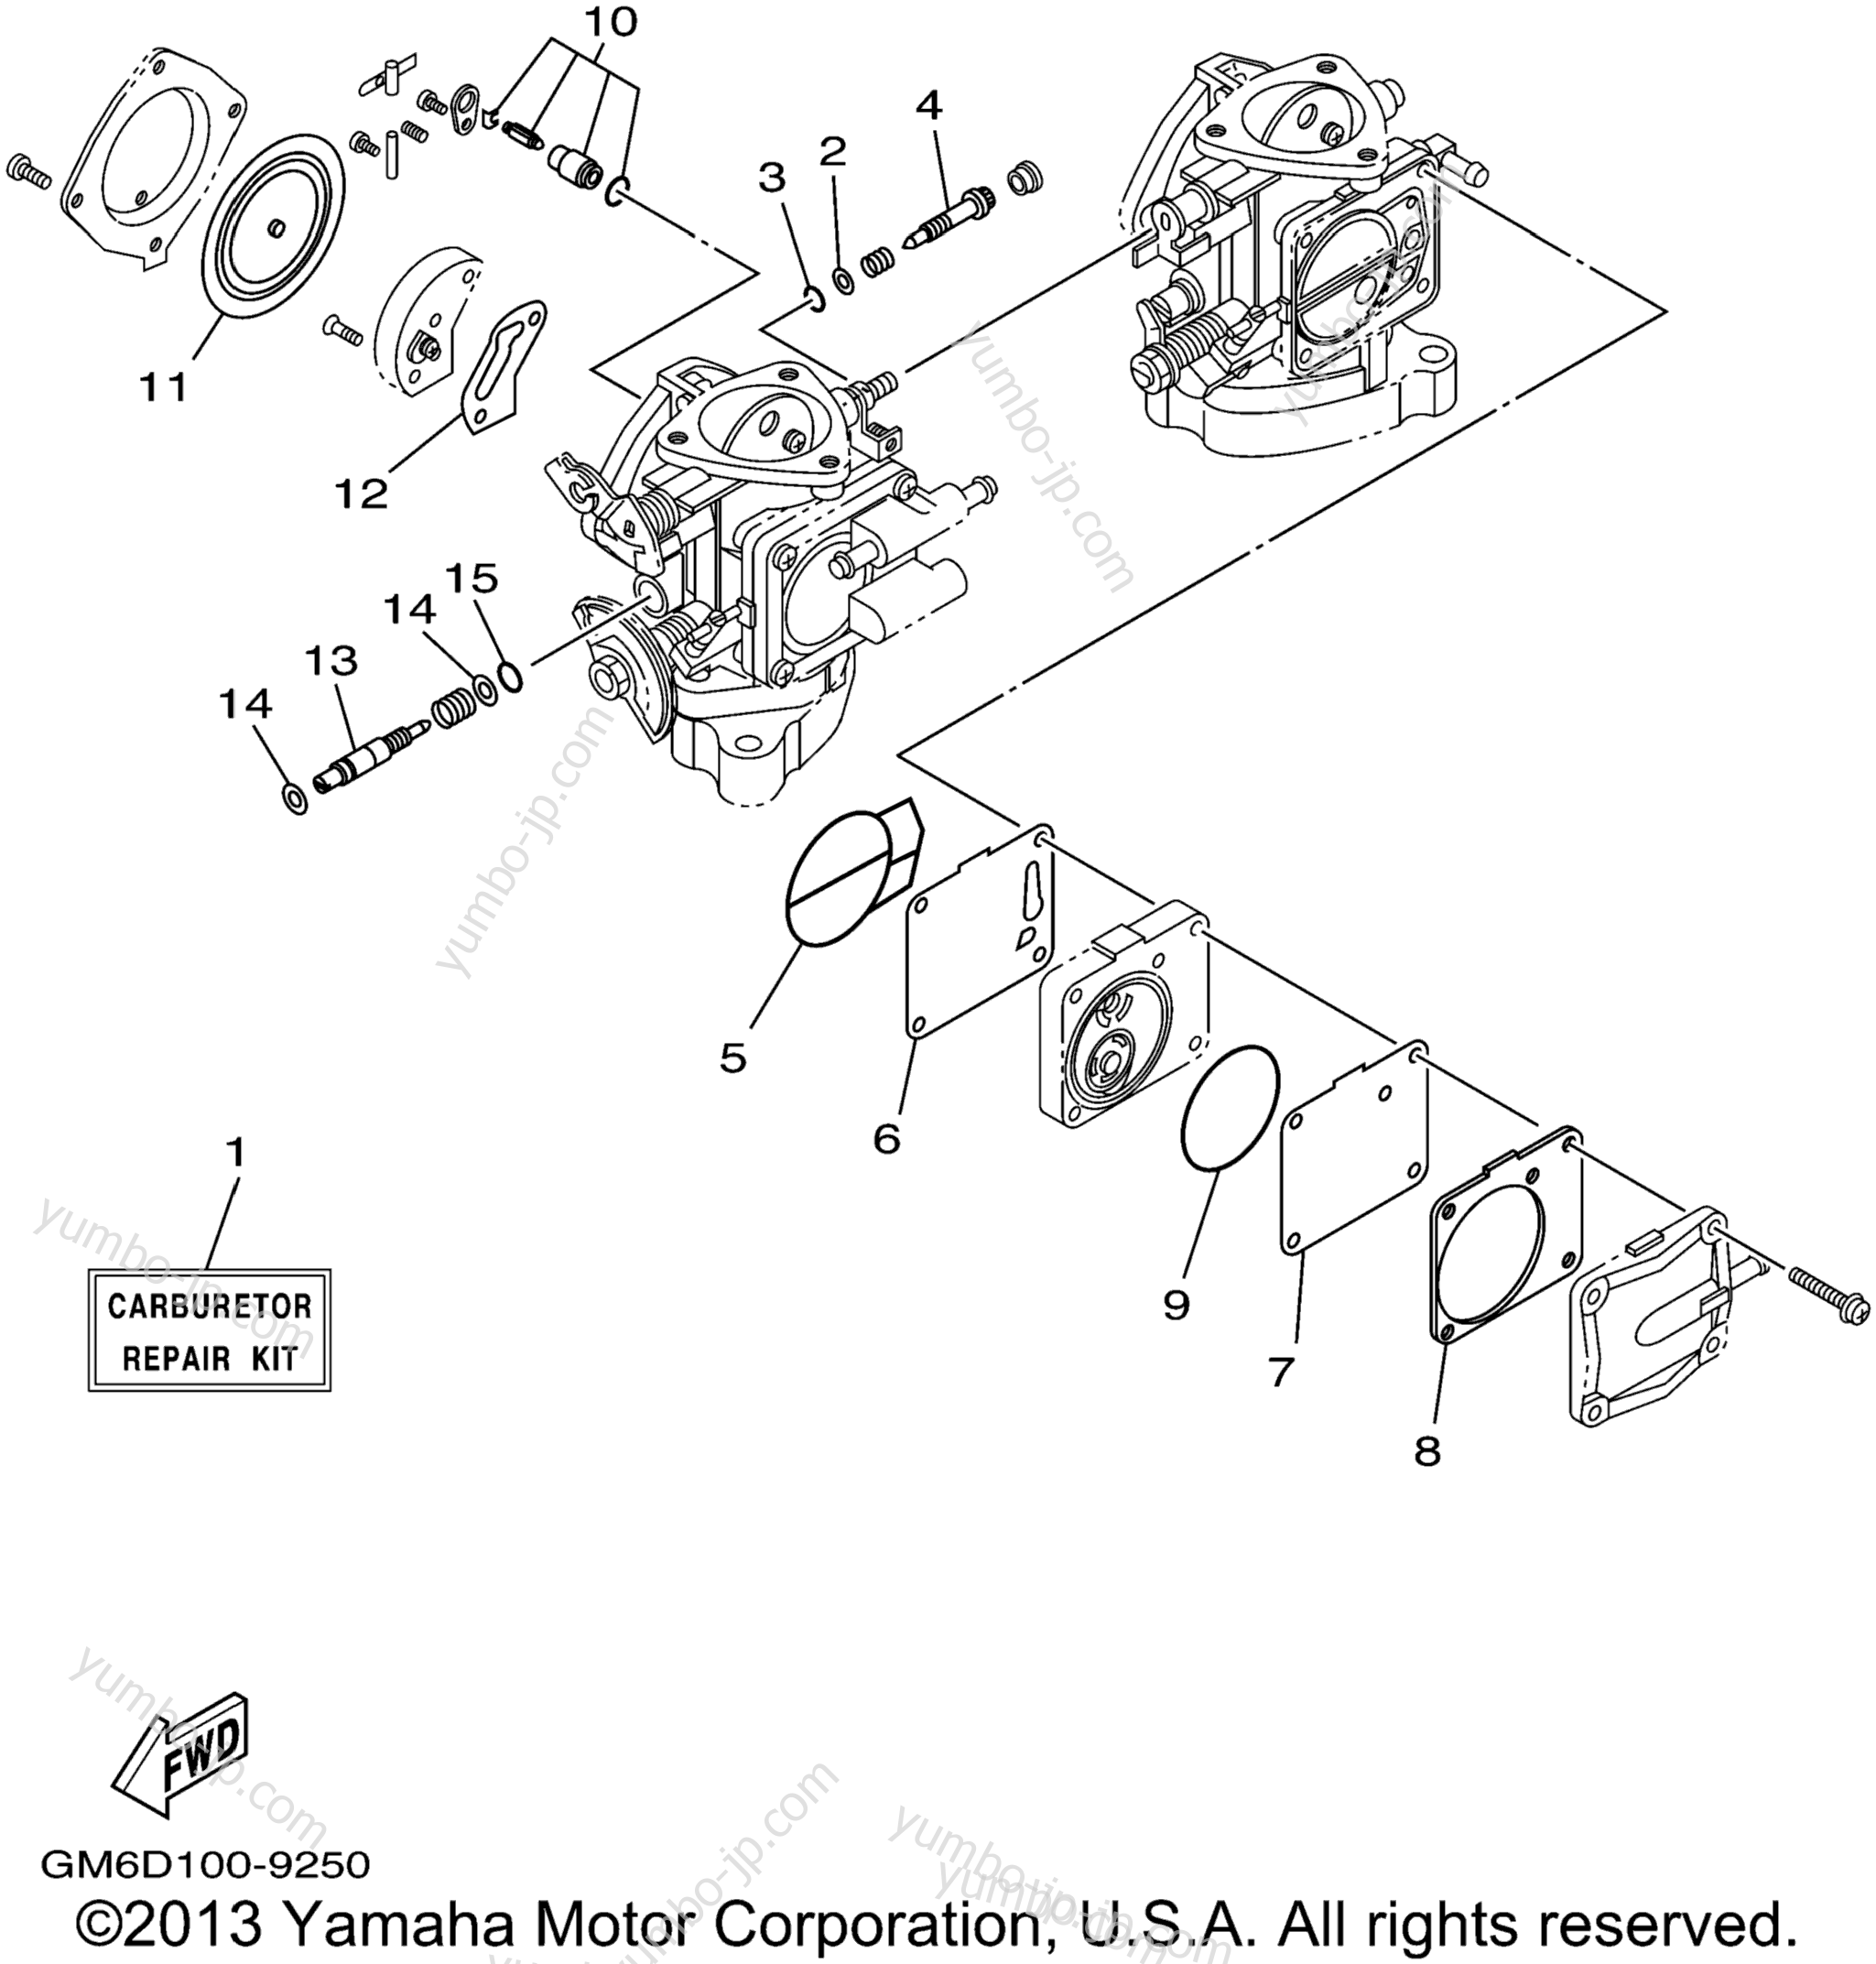 Repair Kit 2 для гидроциклов YAMAHA WAVE RUNNER XL700 (XL700X) 1999 г.